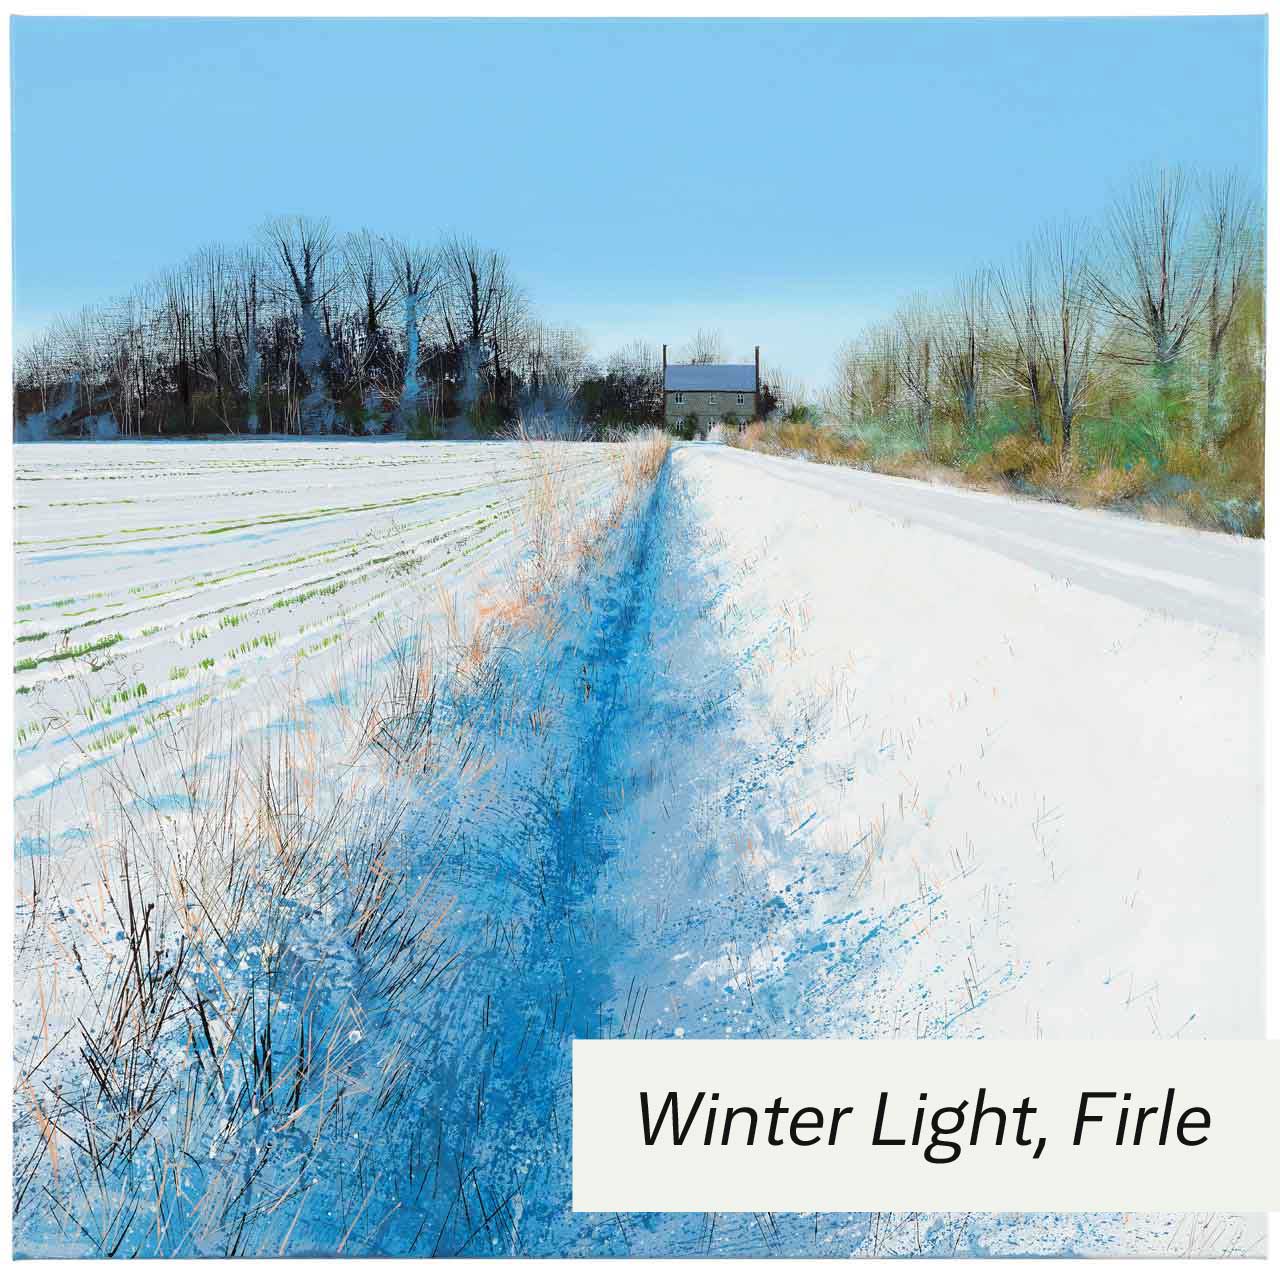 Winter Light, Firle by Paul Evans